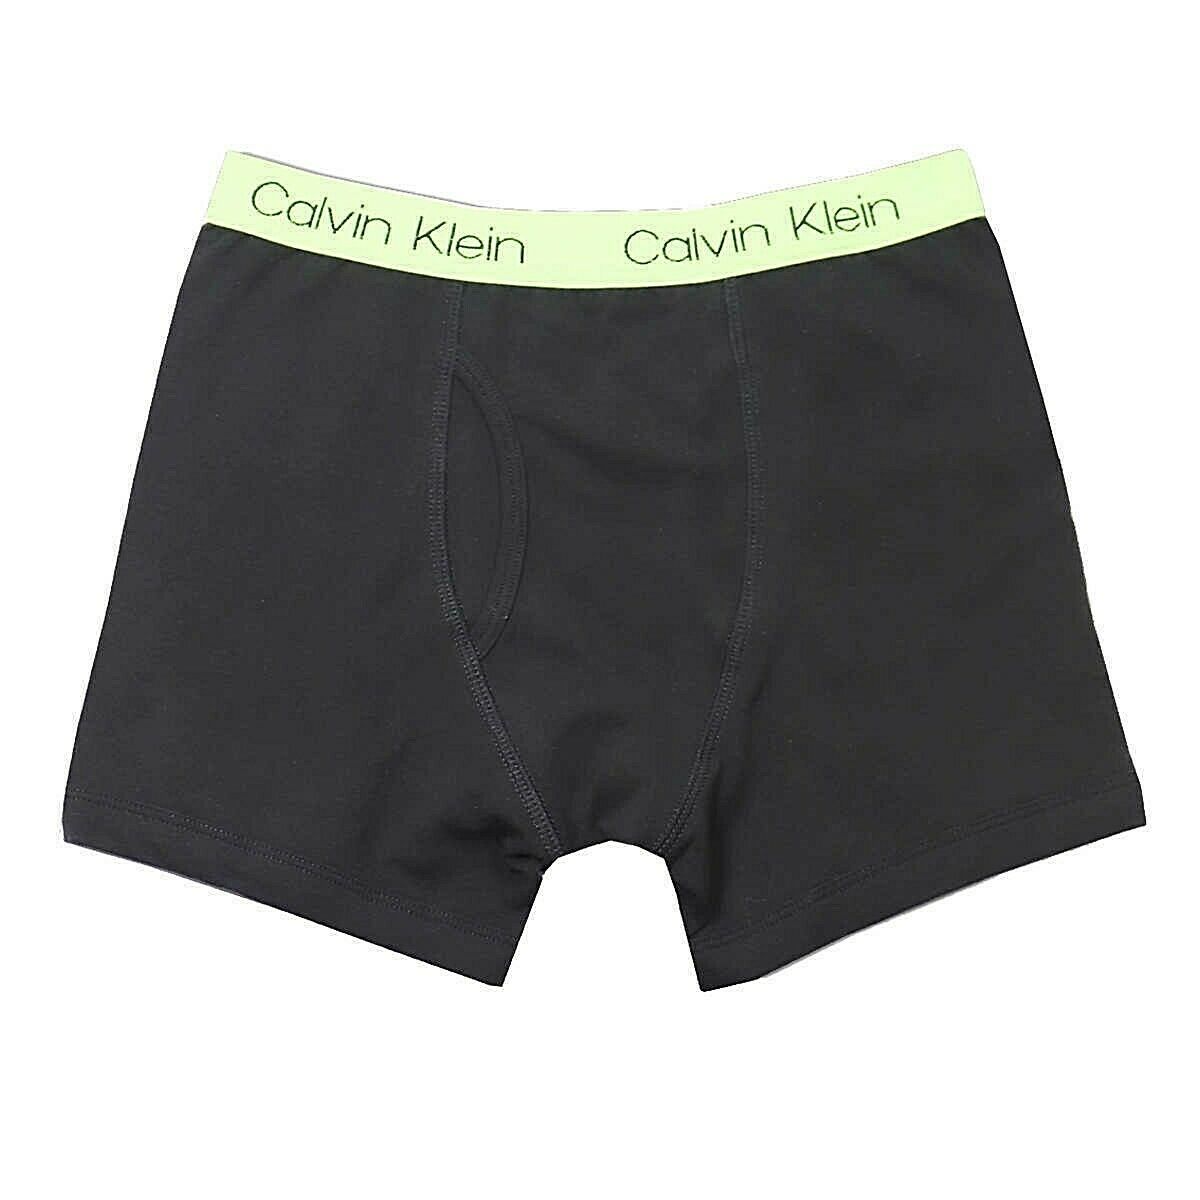 Calvin Klein Men's Three-Pack Classic Briefs (3 Pack)